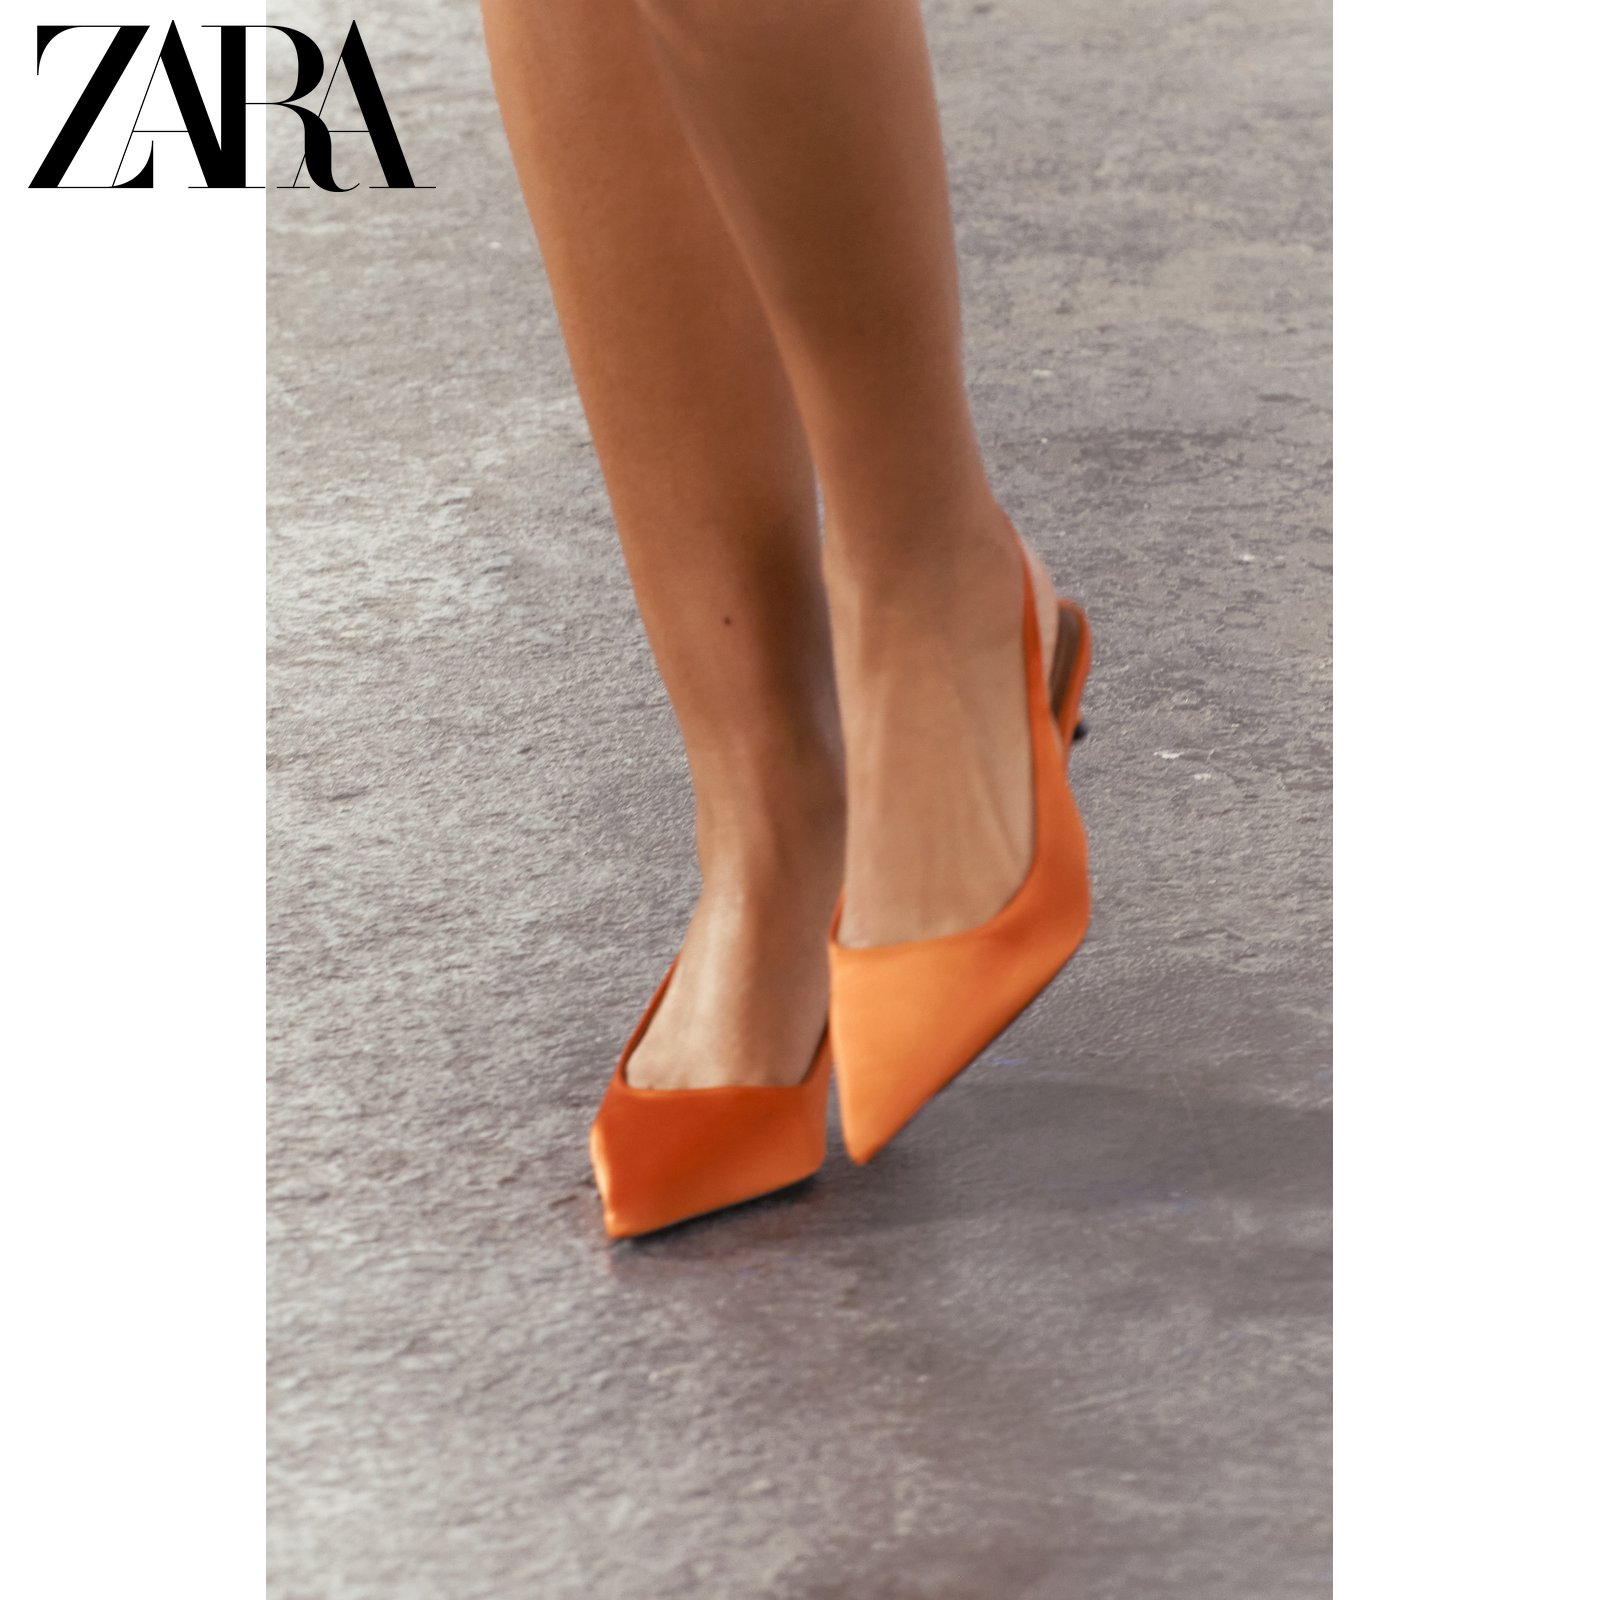 ZARA 春の新作婦人靴気質カジュアル ポインテッドトゥ キャットヒール ミュール ハイヒール 1216310 070